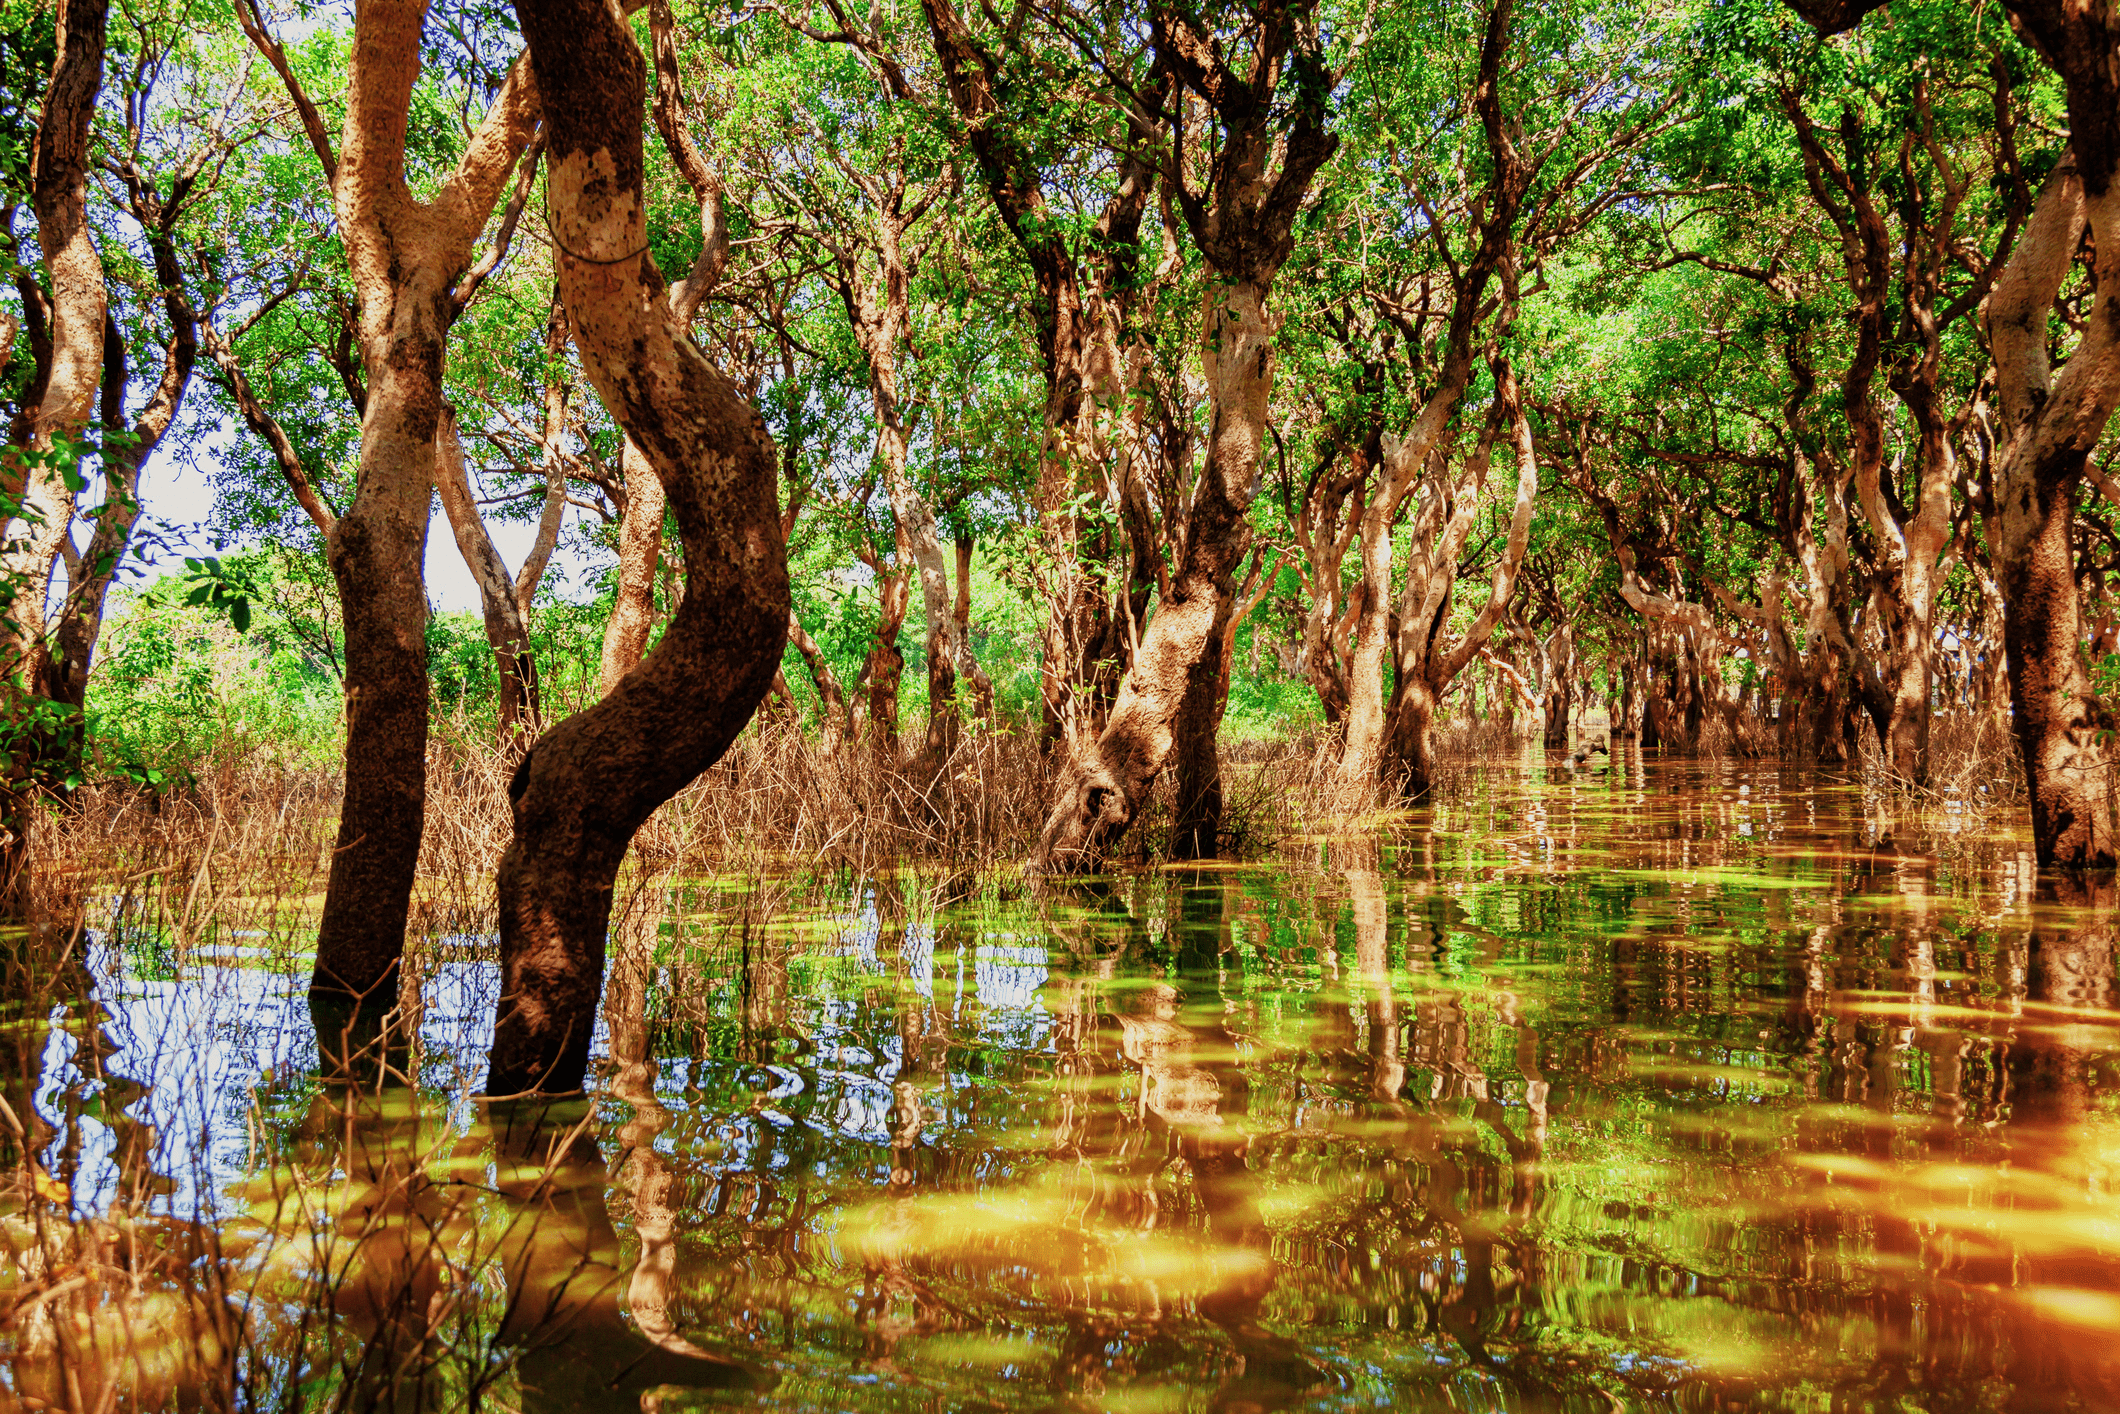 Mangrove trees near a swampy area